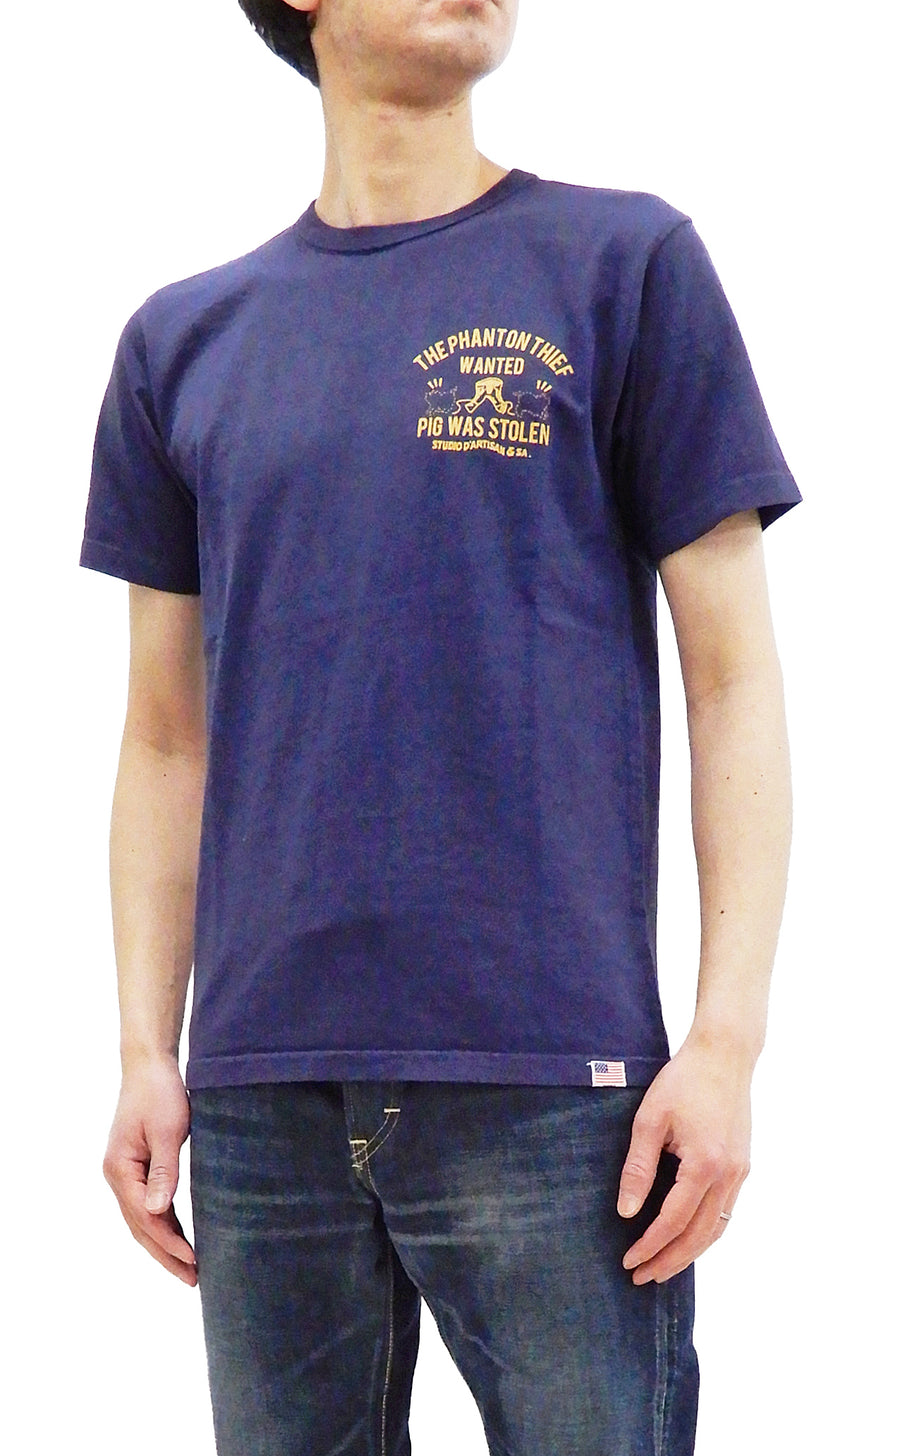 Studio D'artisan T-shirt Men's Short Sleeve Printed Graphic Tee 8030A Navy-Blue